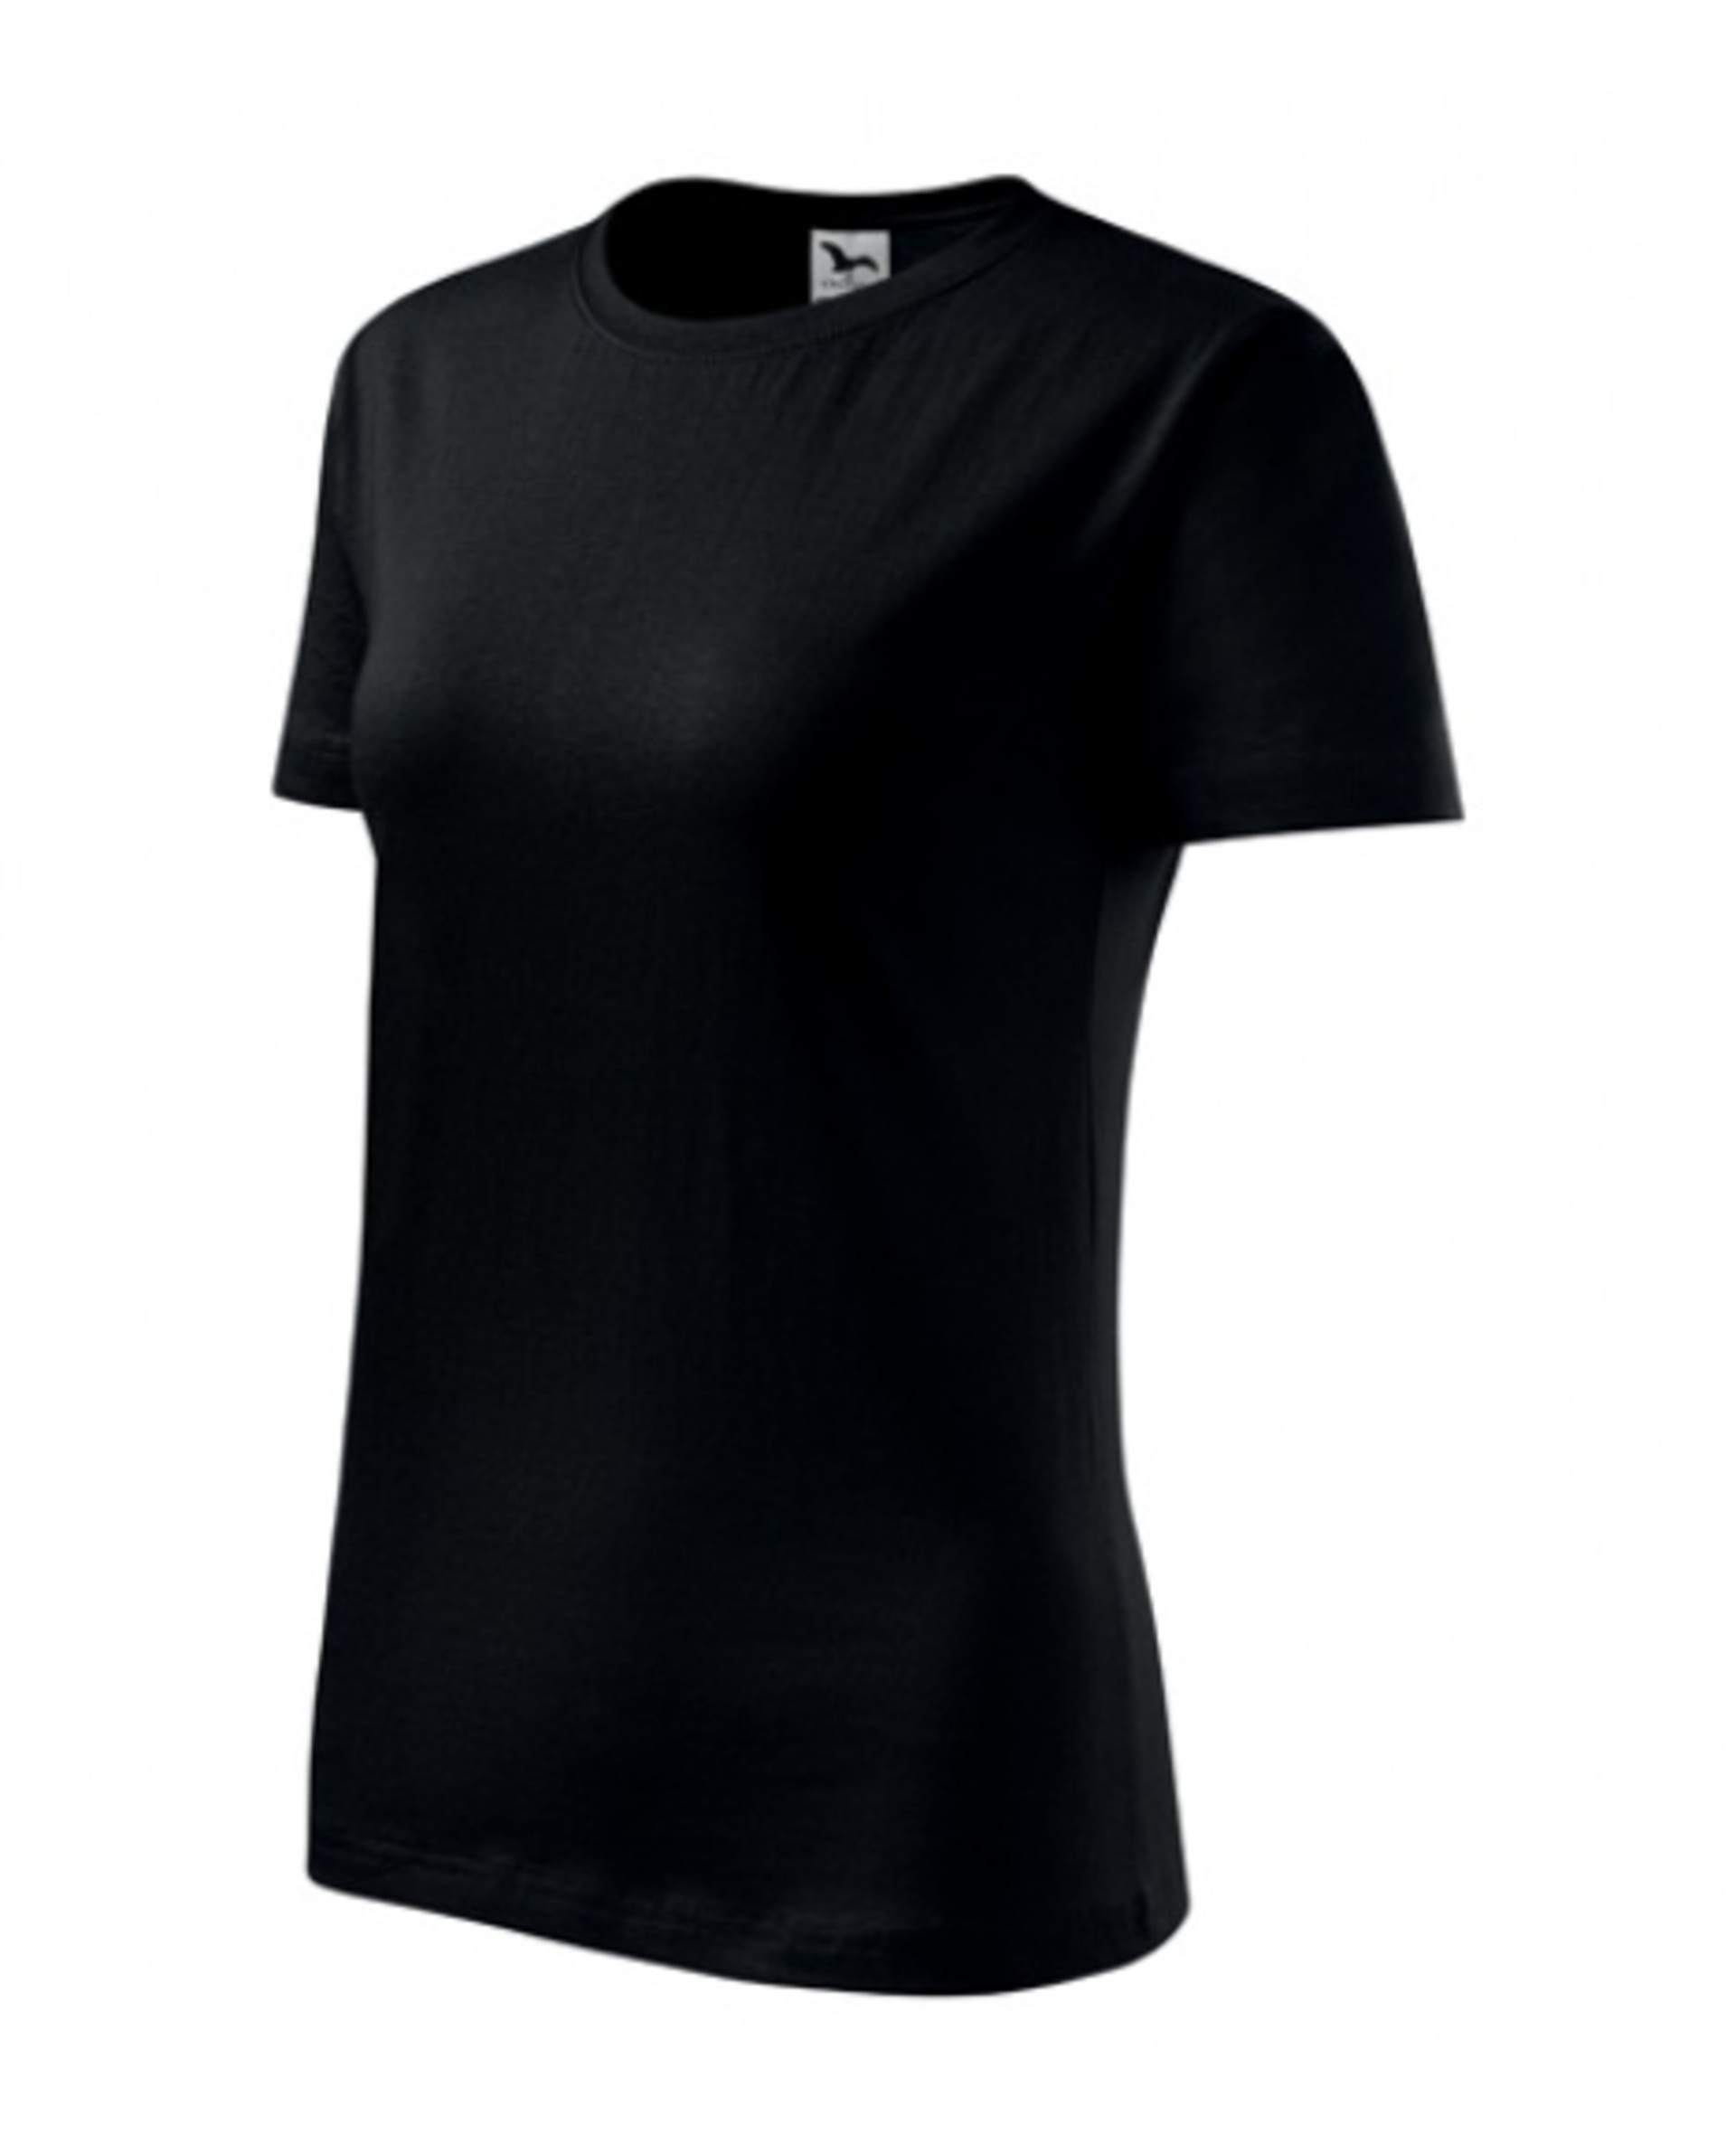 Tričko ADLER CLASSIC NEW dámské černá XL